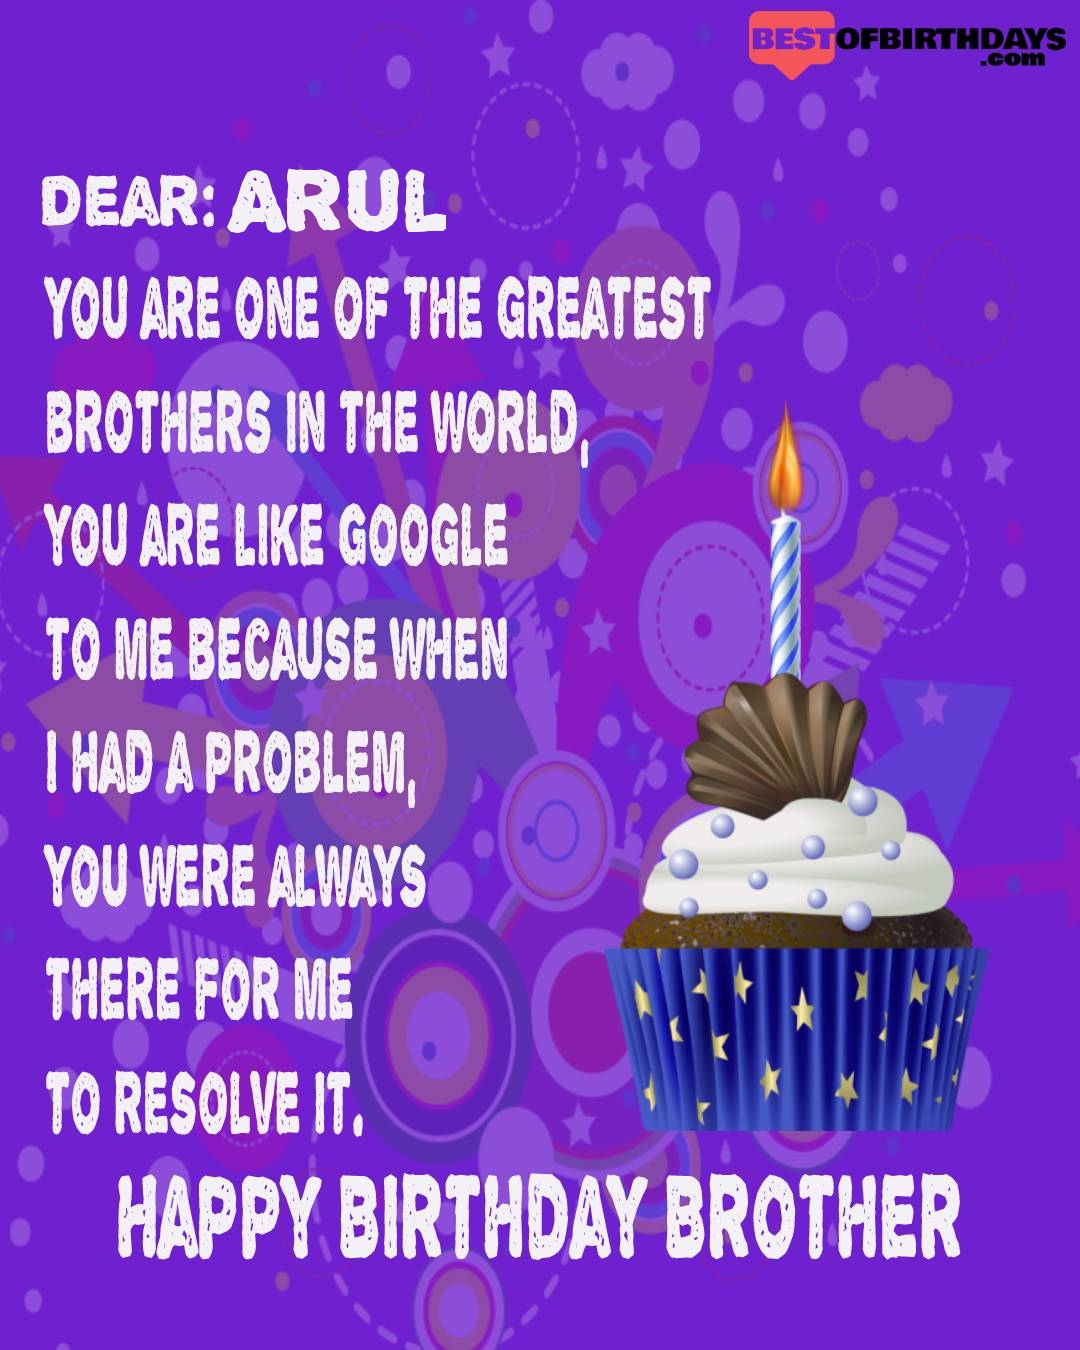 Happy birthday arul bhai brother bro